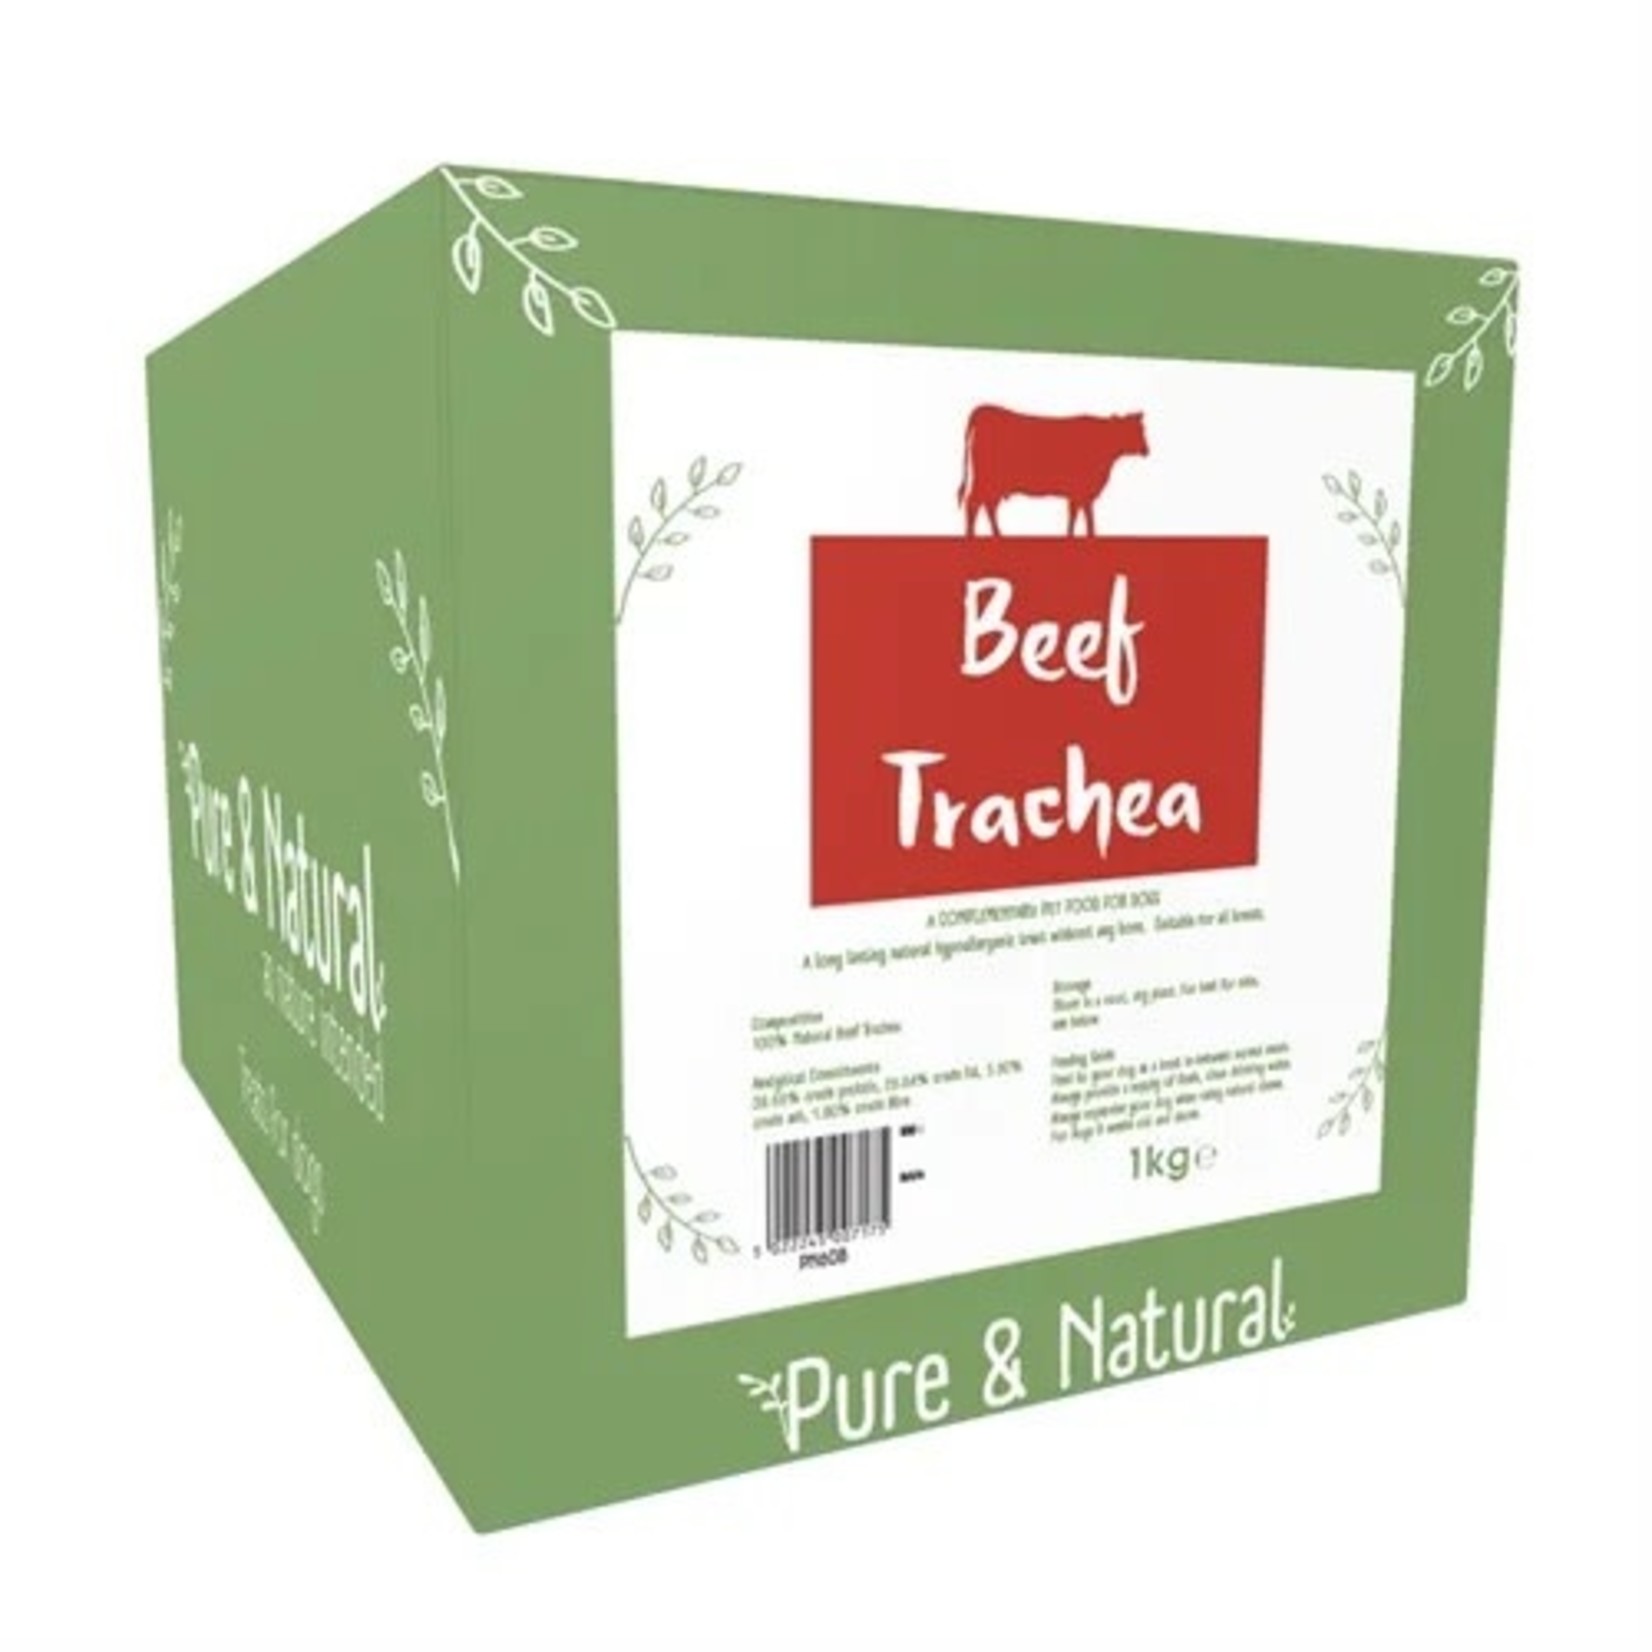 Pure & Natural Beef Trachea Dog Treats, 1kg Box